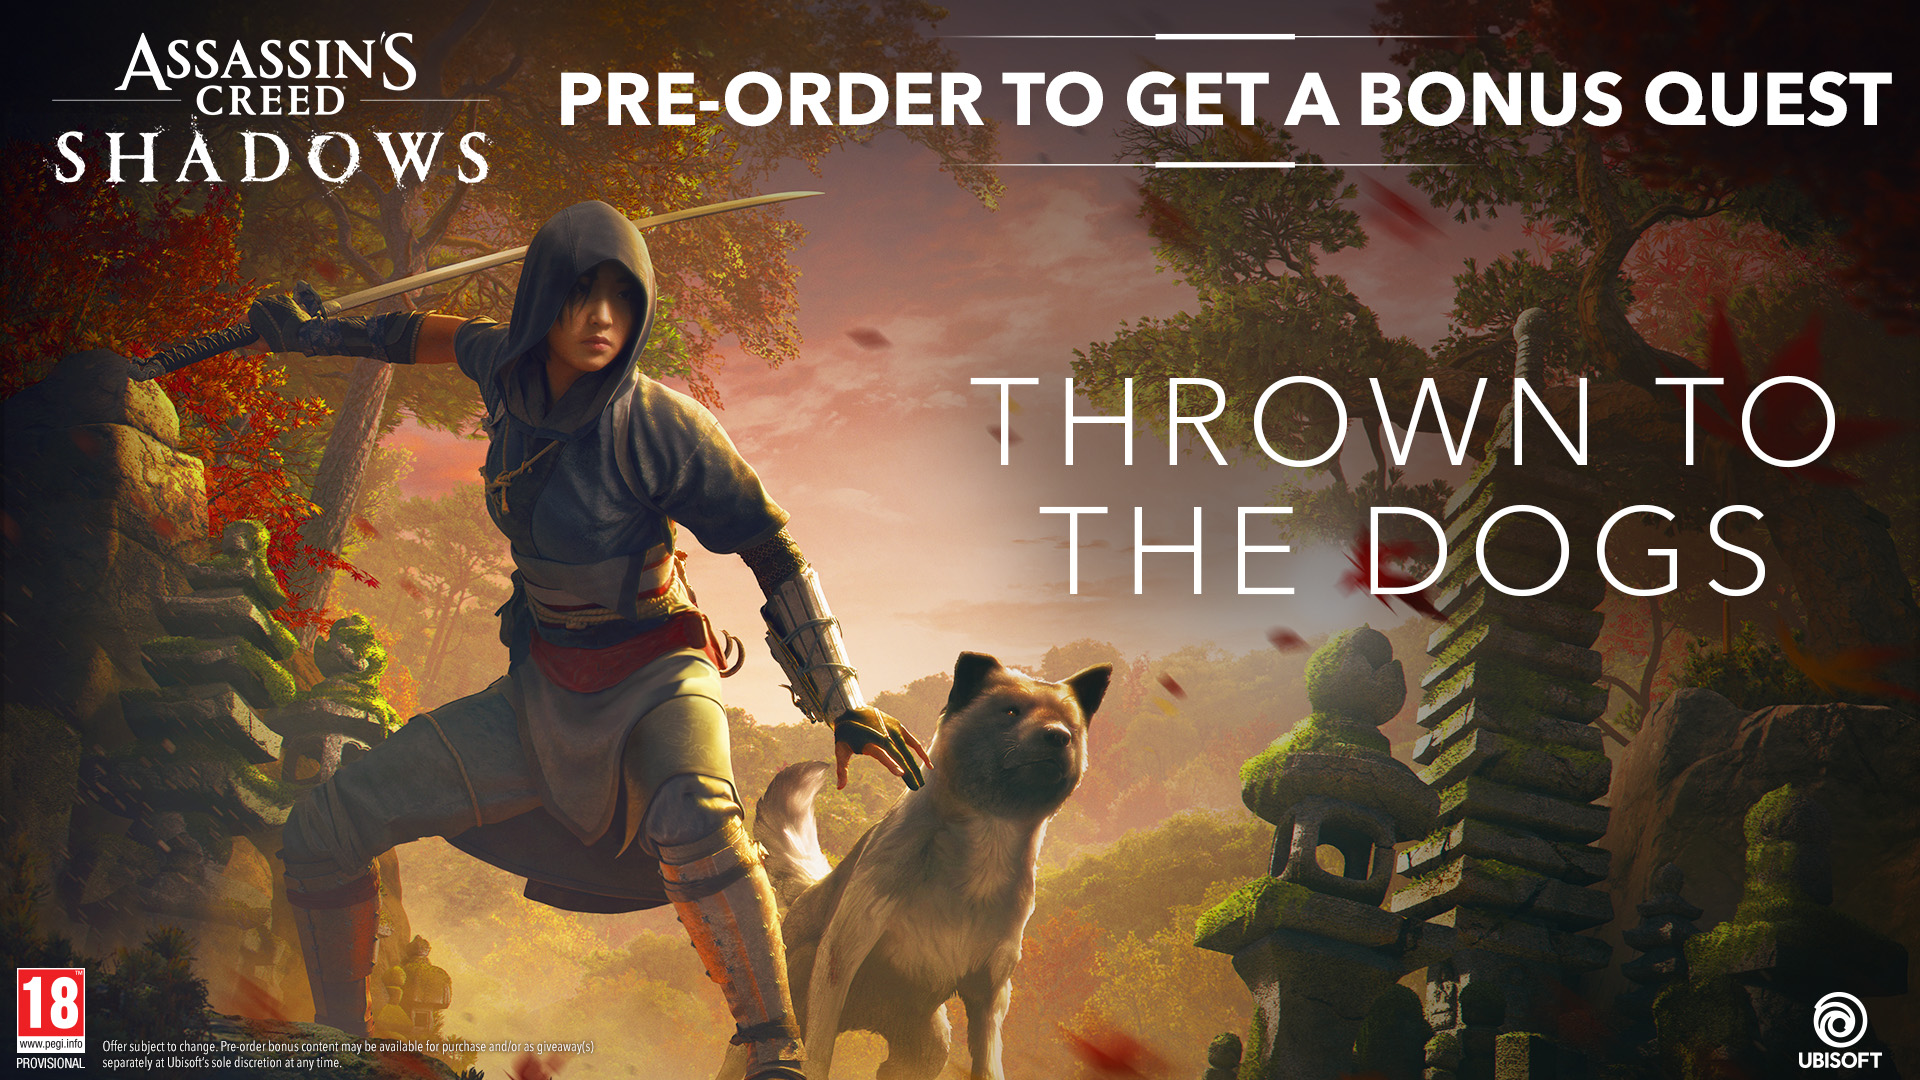  Assassin's Creed Shadows - Pre-order bonus